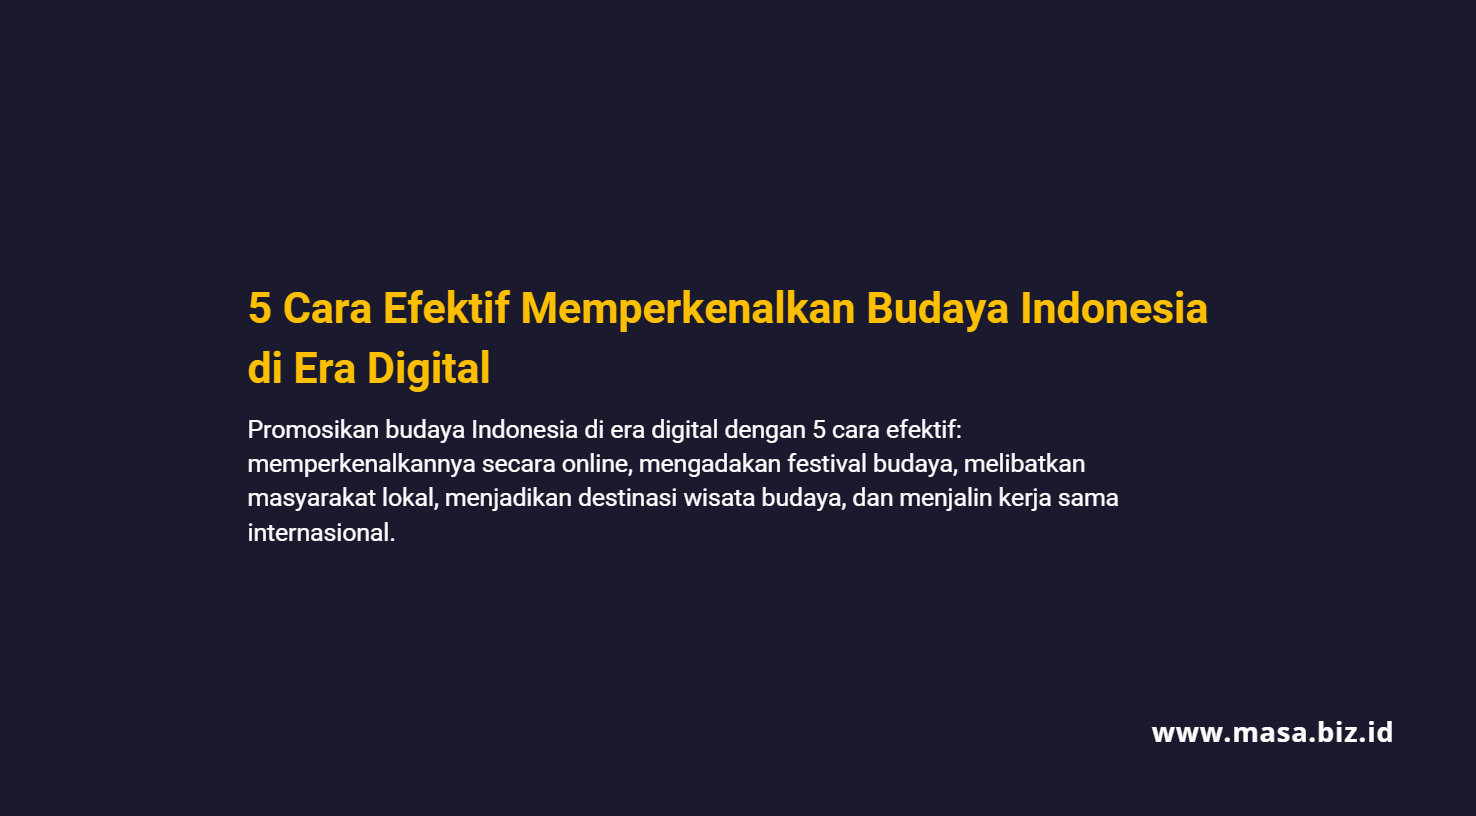 5 Cara Efektif Memperkenalkan Budaya Indonesia di Era Digital